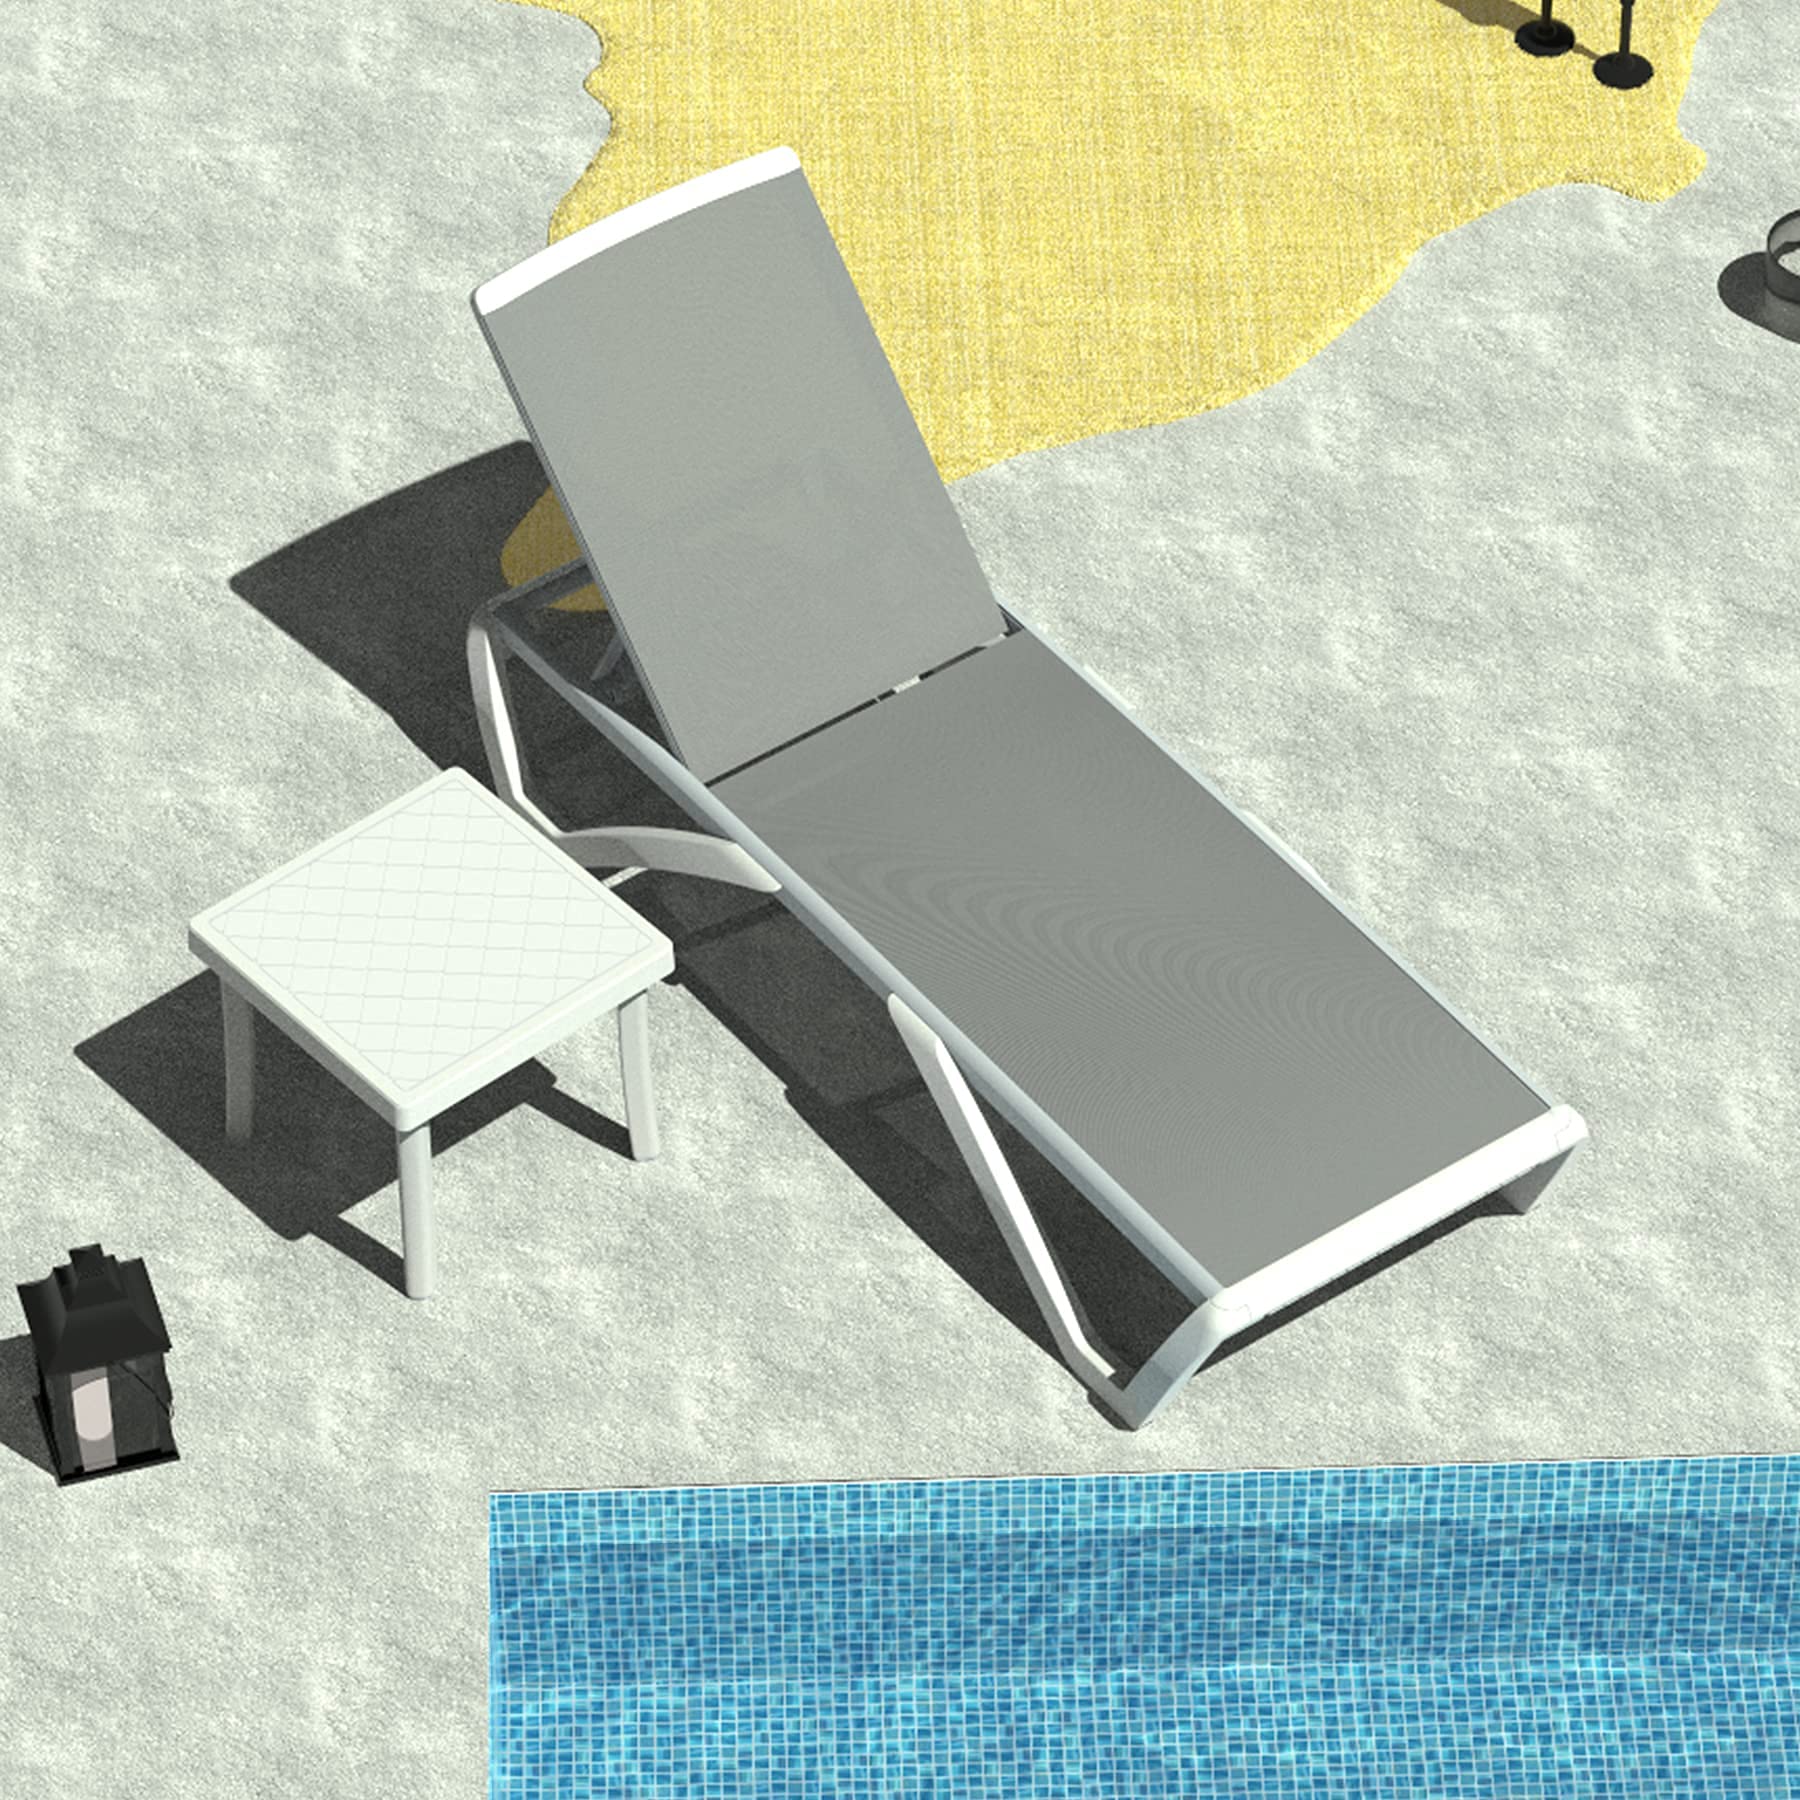 Mydepot Domi Patio Chaise Lounge, Outdoor Aluminum, Polypropylene, Adjustable Backrest, Beach Chair - image 2 of 7